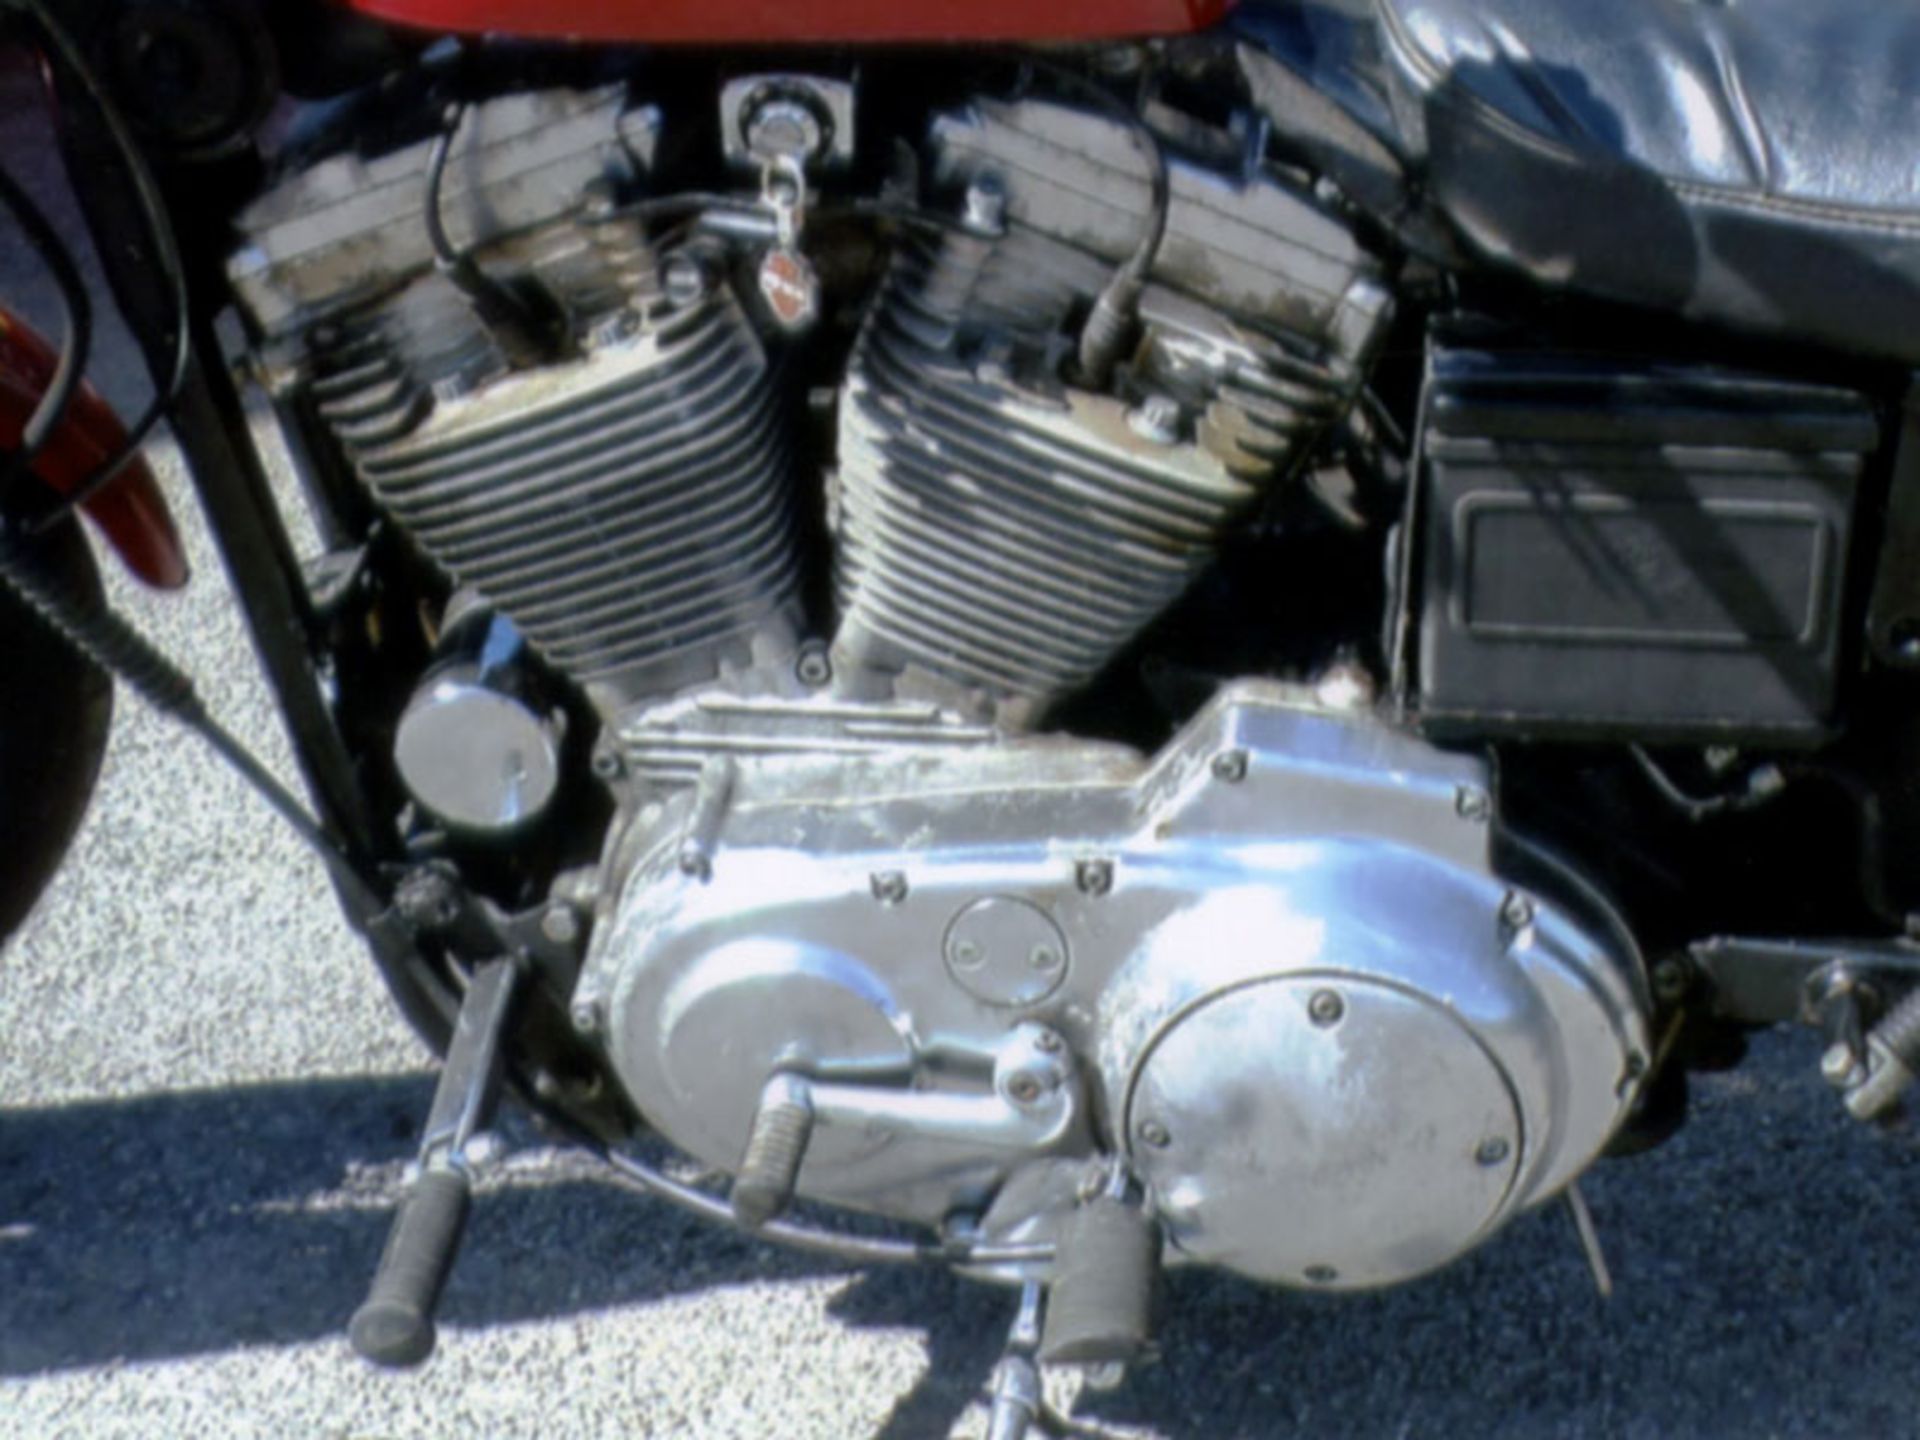 - Totally original bike

- Rare Hugger model

- 883cc Evo engine

- Same owner for 15 years

- Great - Image 3 of 3